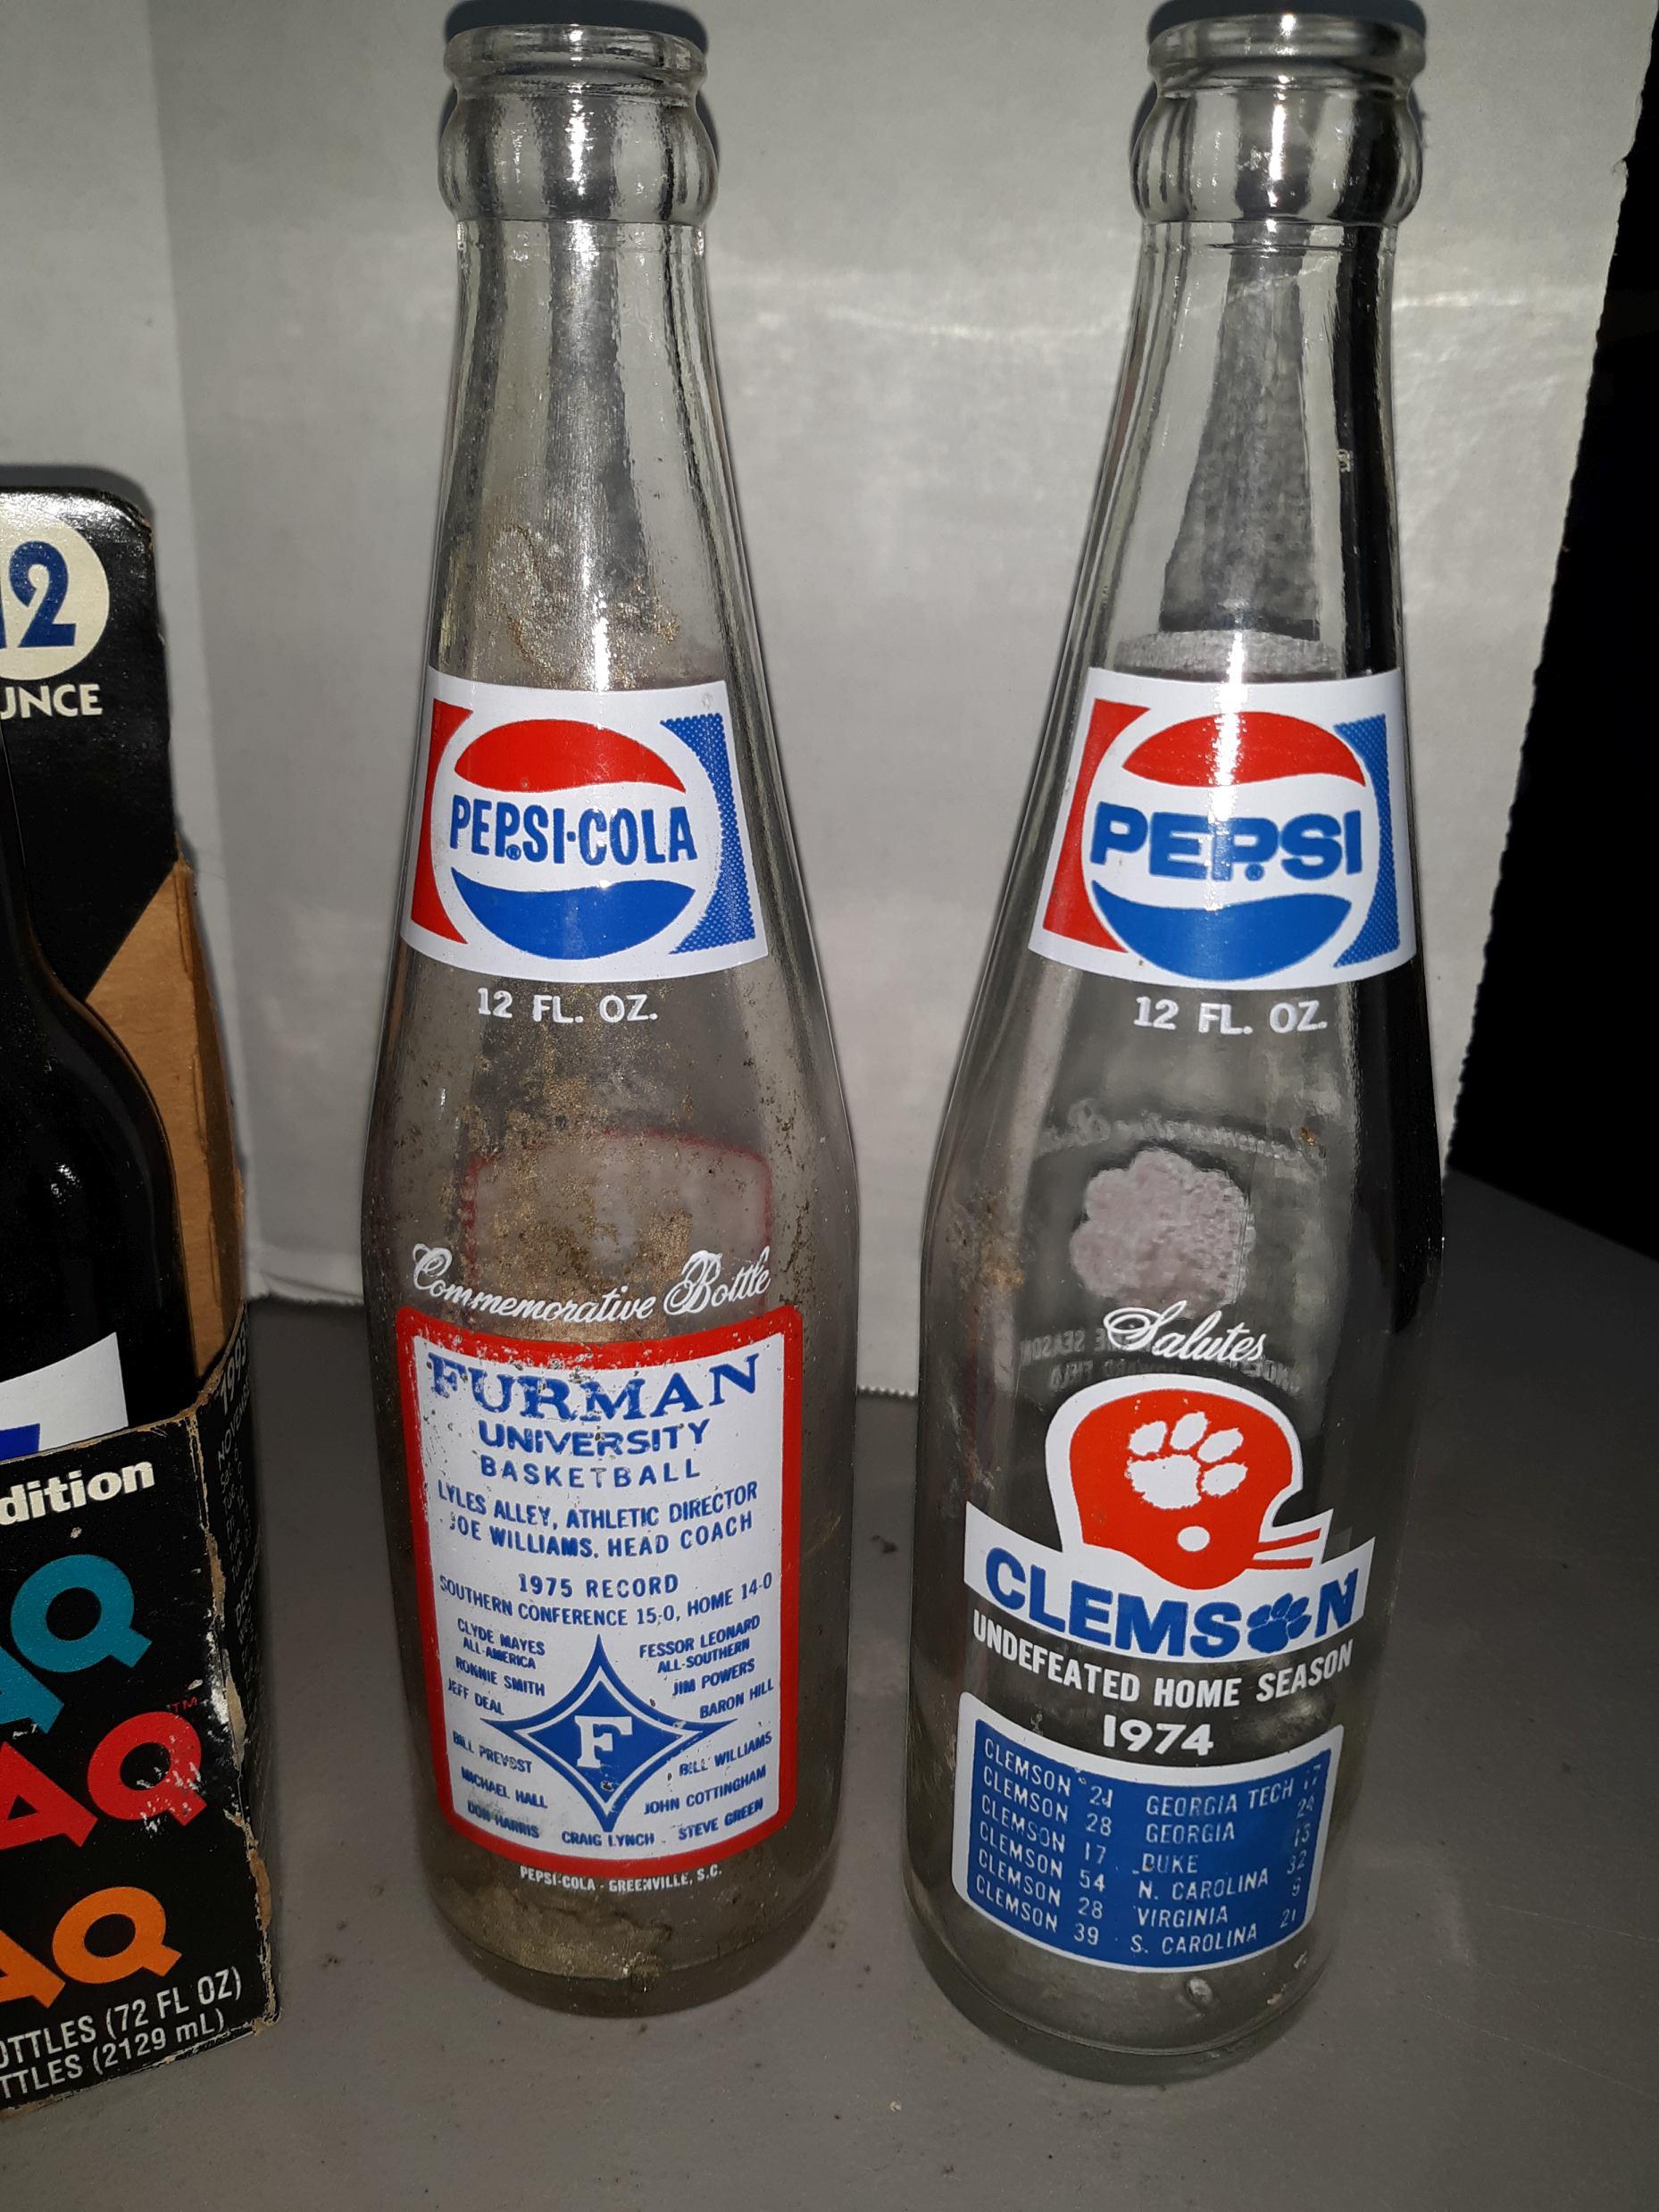 Pepsi Bottle Lot, Clemson, Furman, Shaq Attack, etc.